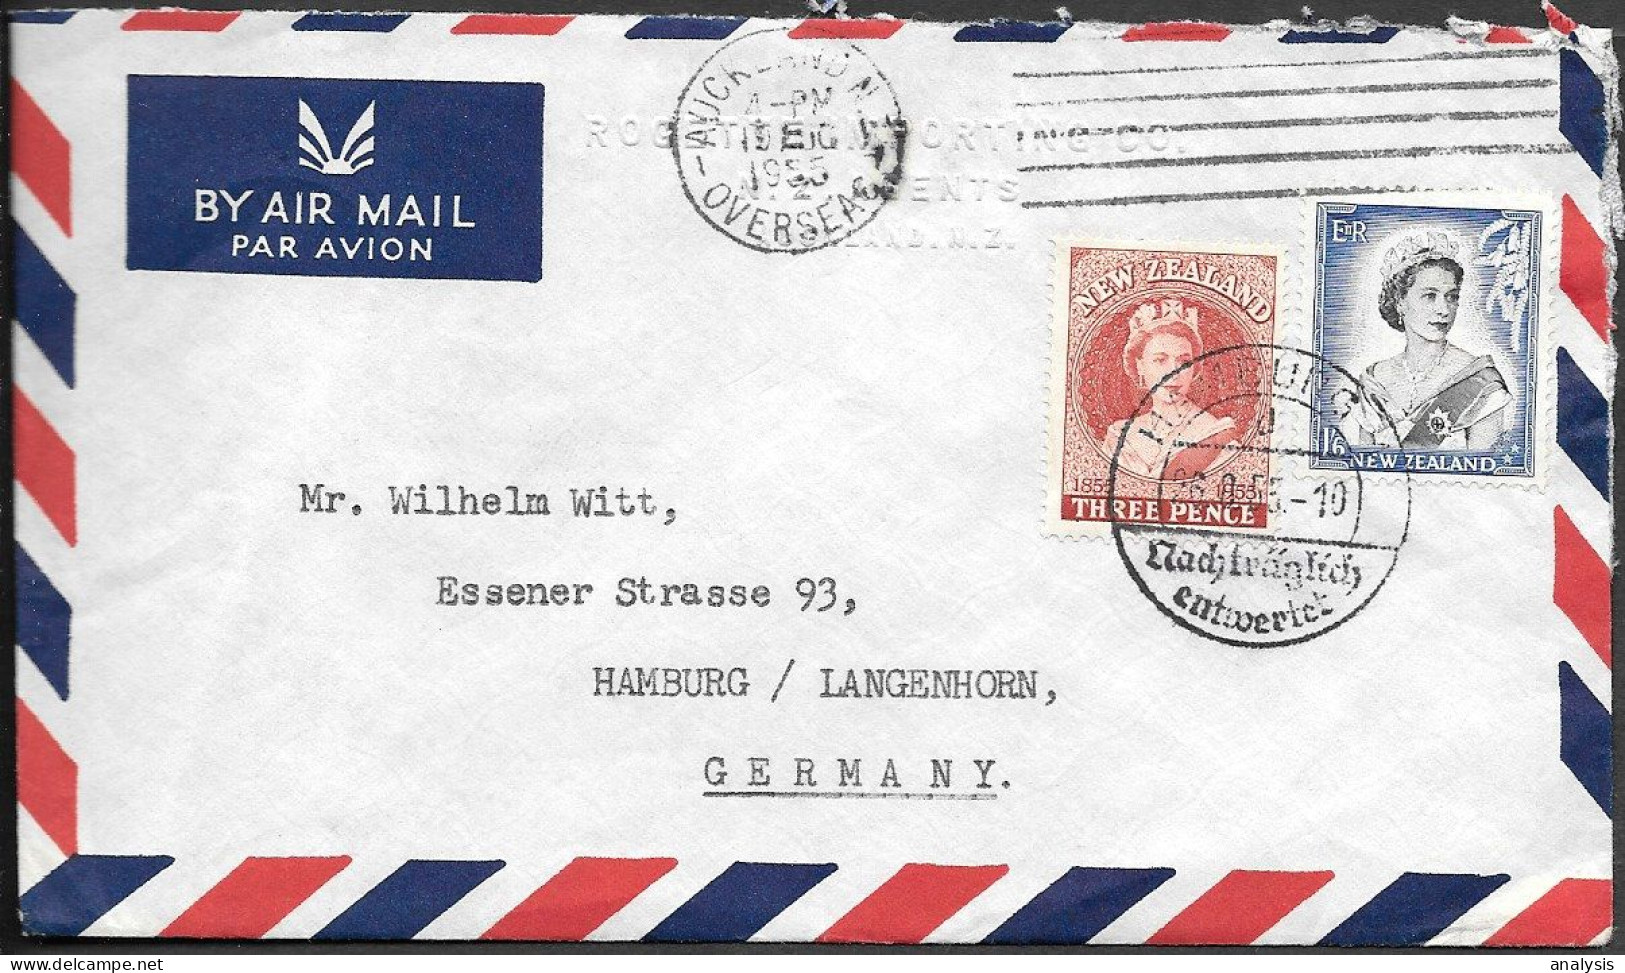 New Zealand Auckland Cover To Germany 1955. QEII Stamps - Brieven En Documenten